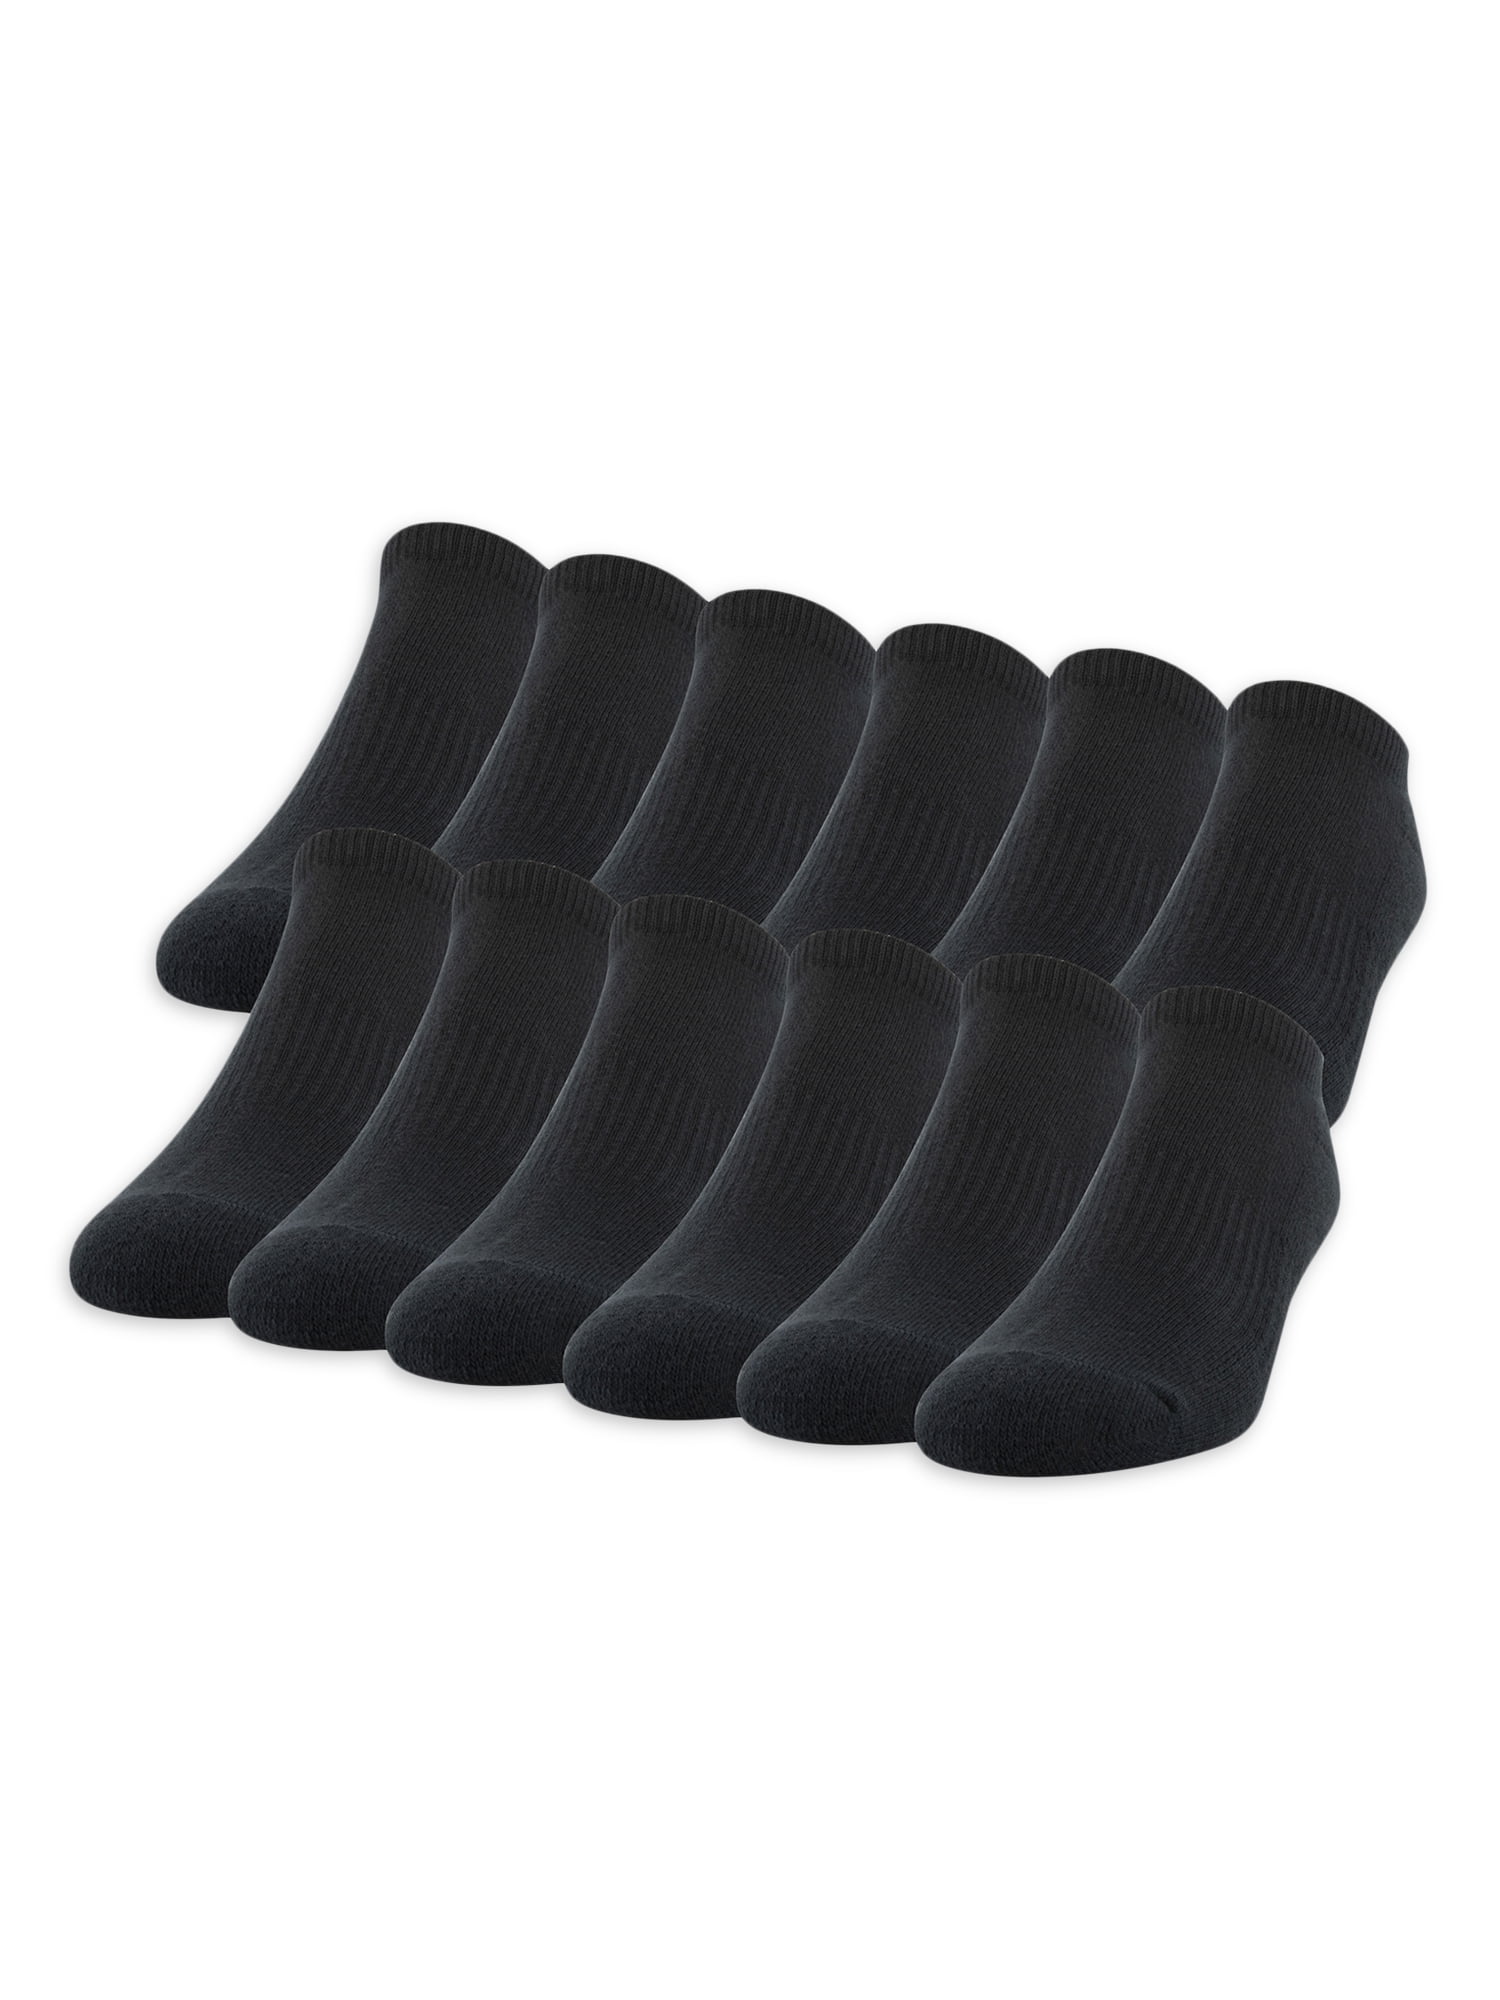 Athletic Works Men's No Show Cushion Socks, 12-Pack - Walmart.com